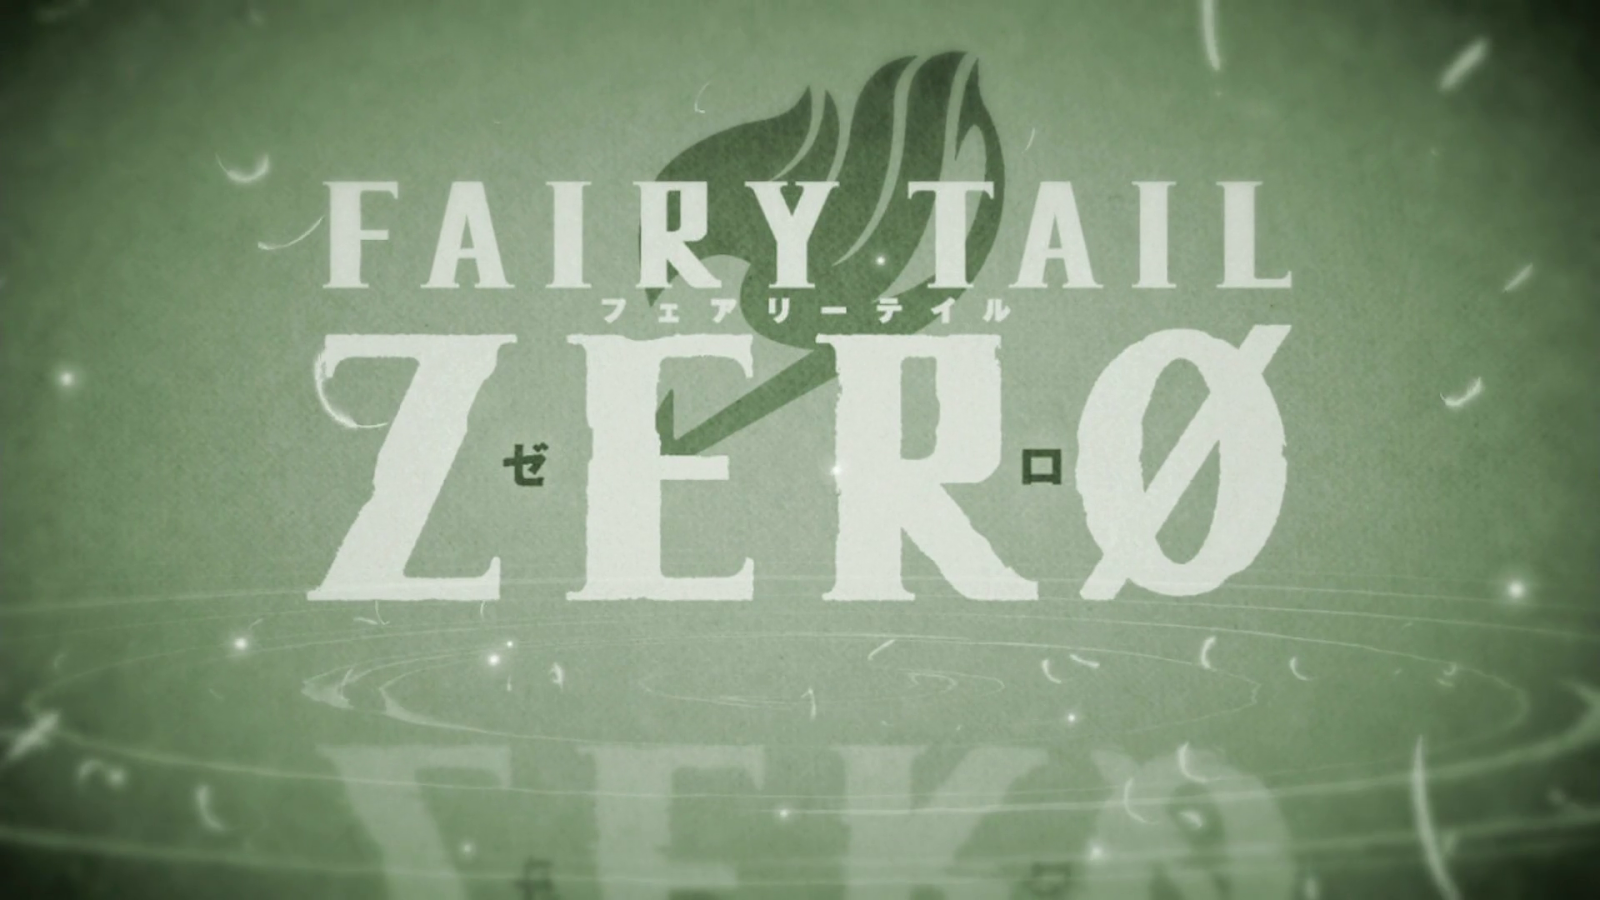 Fairy Tail Zero Wallpaper